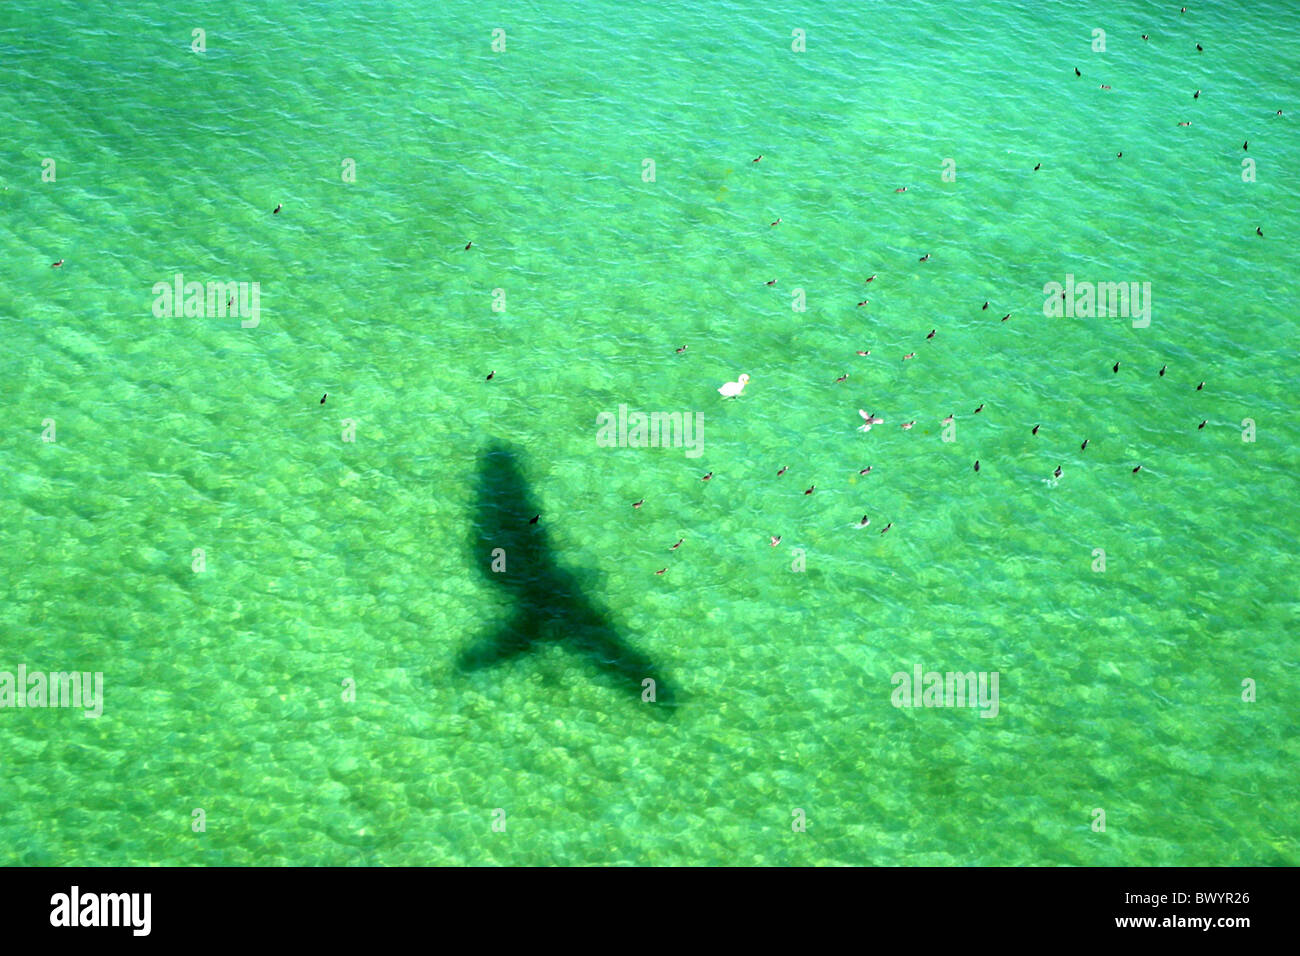 Flugzeug Tier Wasservögel Vögel See Schatten Schatten werfen Ultralightly Ultrasimply Wasser-Wasser Stockfoto